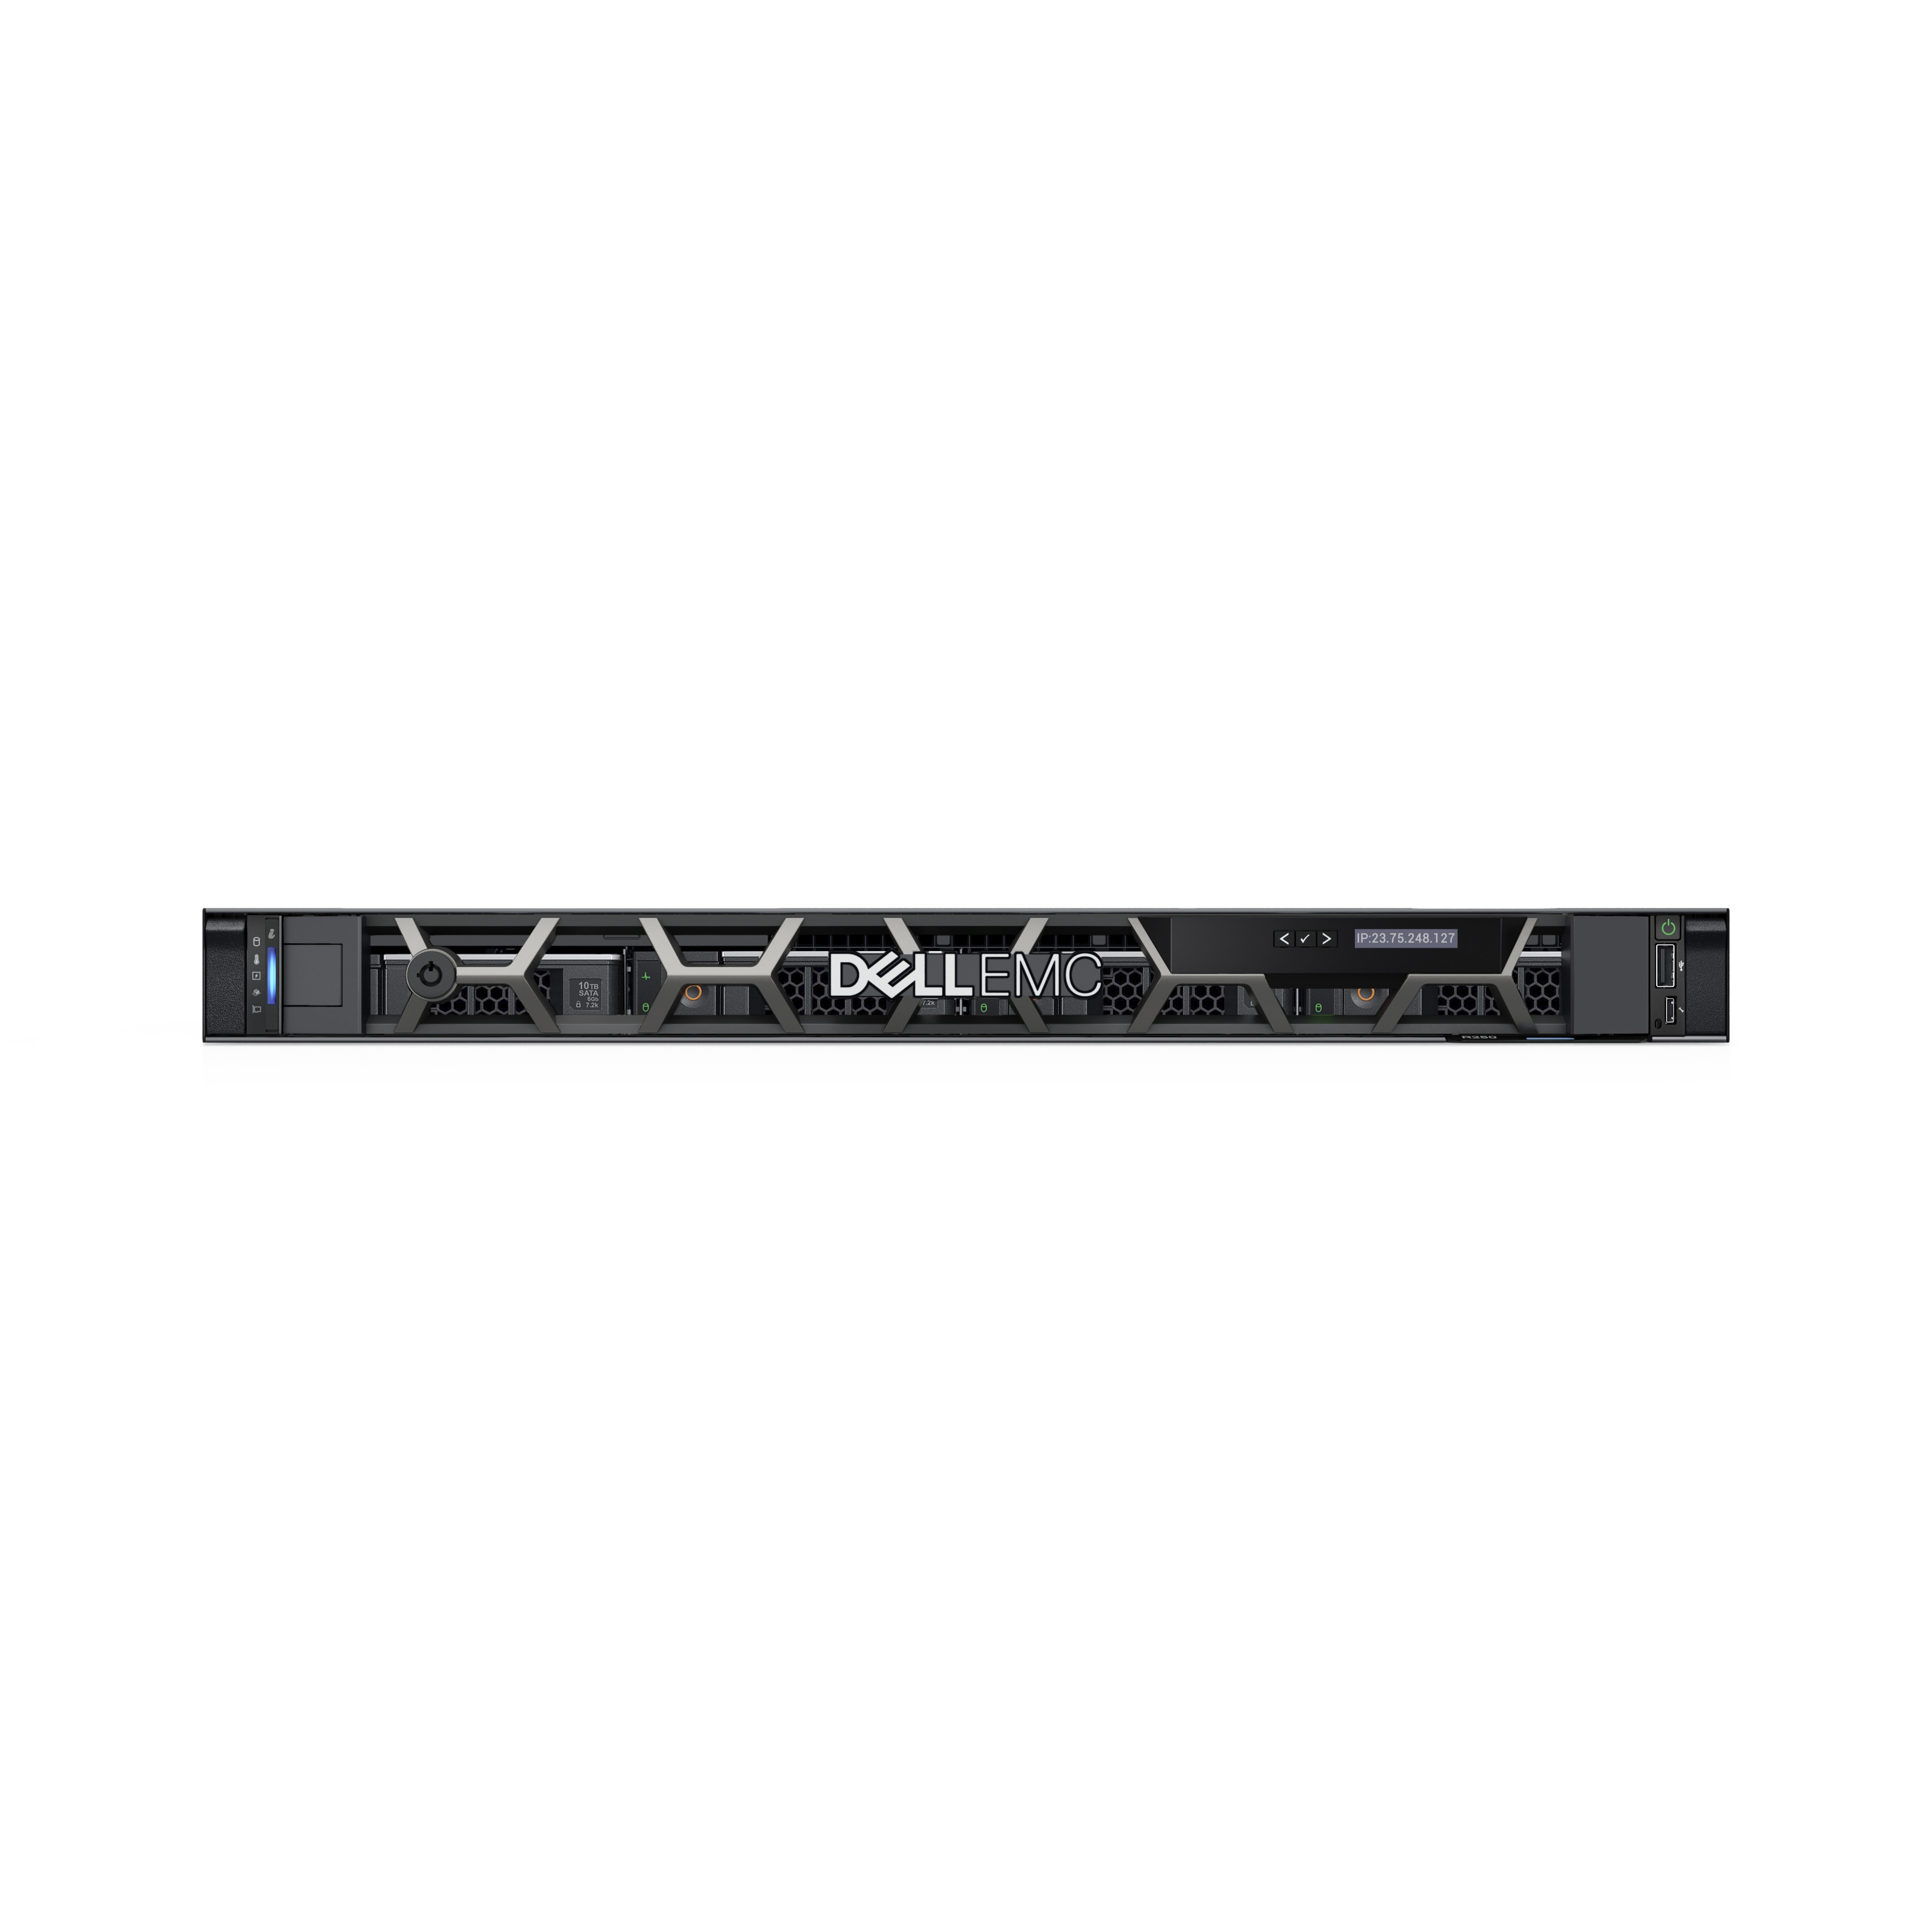 Dell PowerEdge R250 - Server - Rack-Montage - 1U